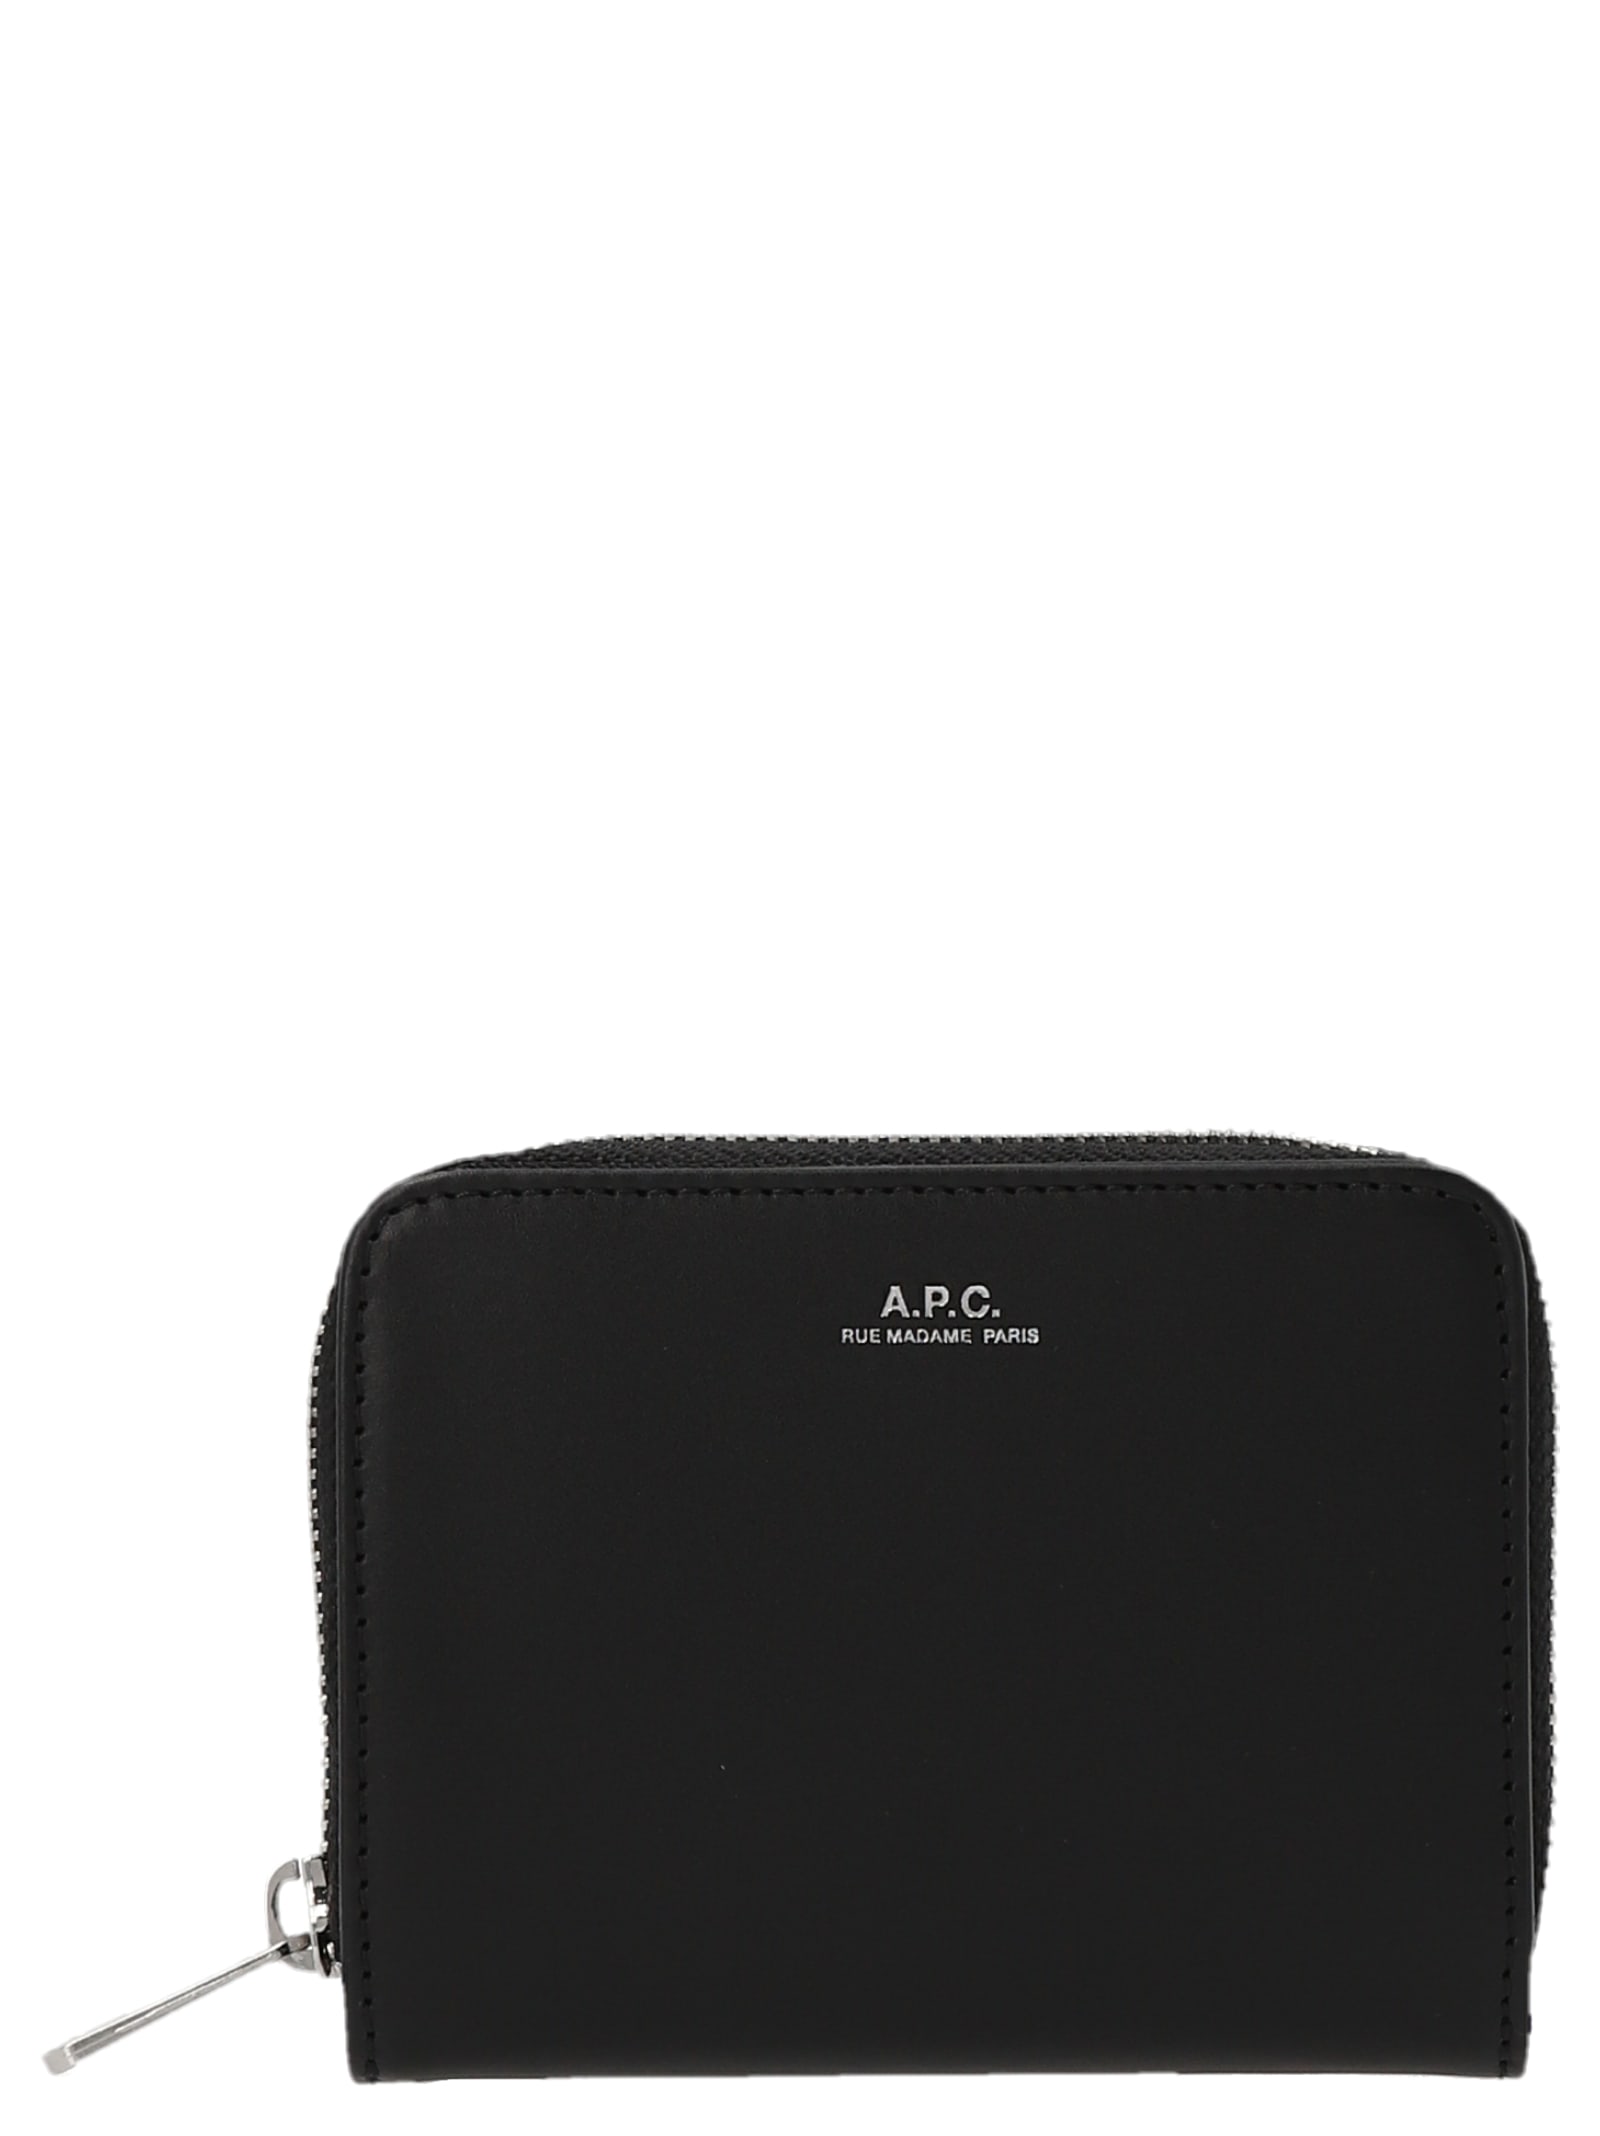 A.p.c. Compact Emmanuel Wallet In Black